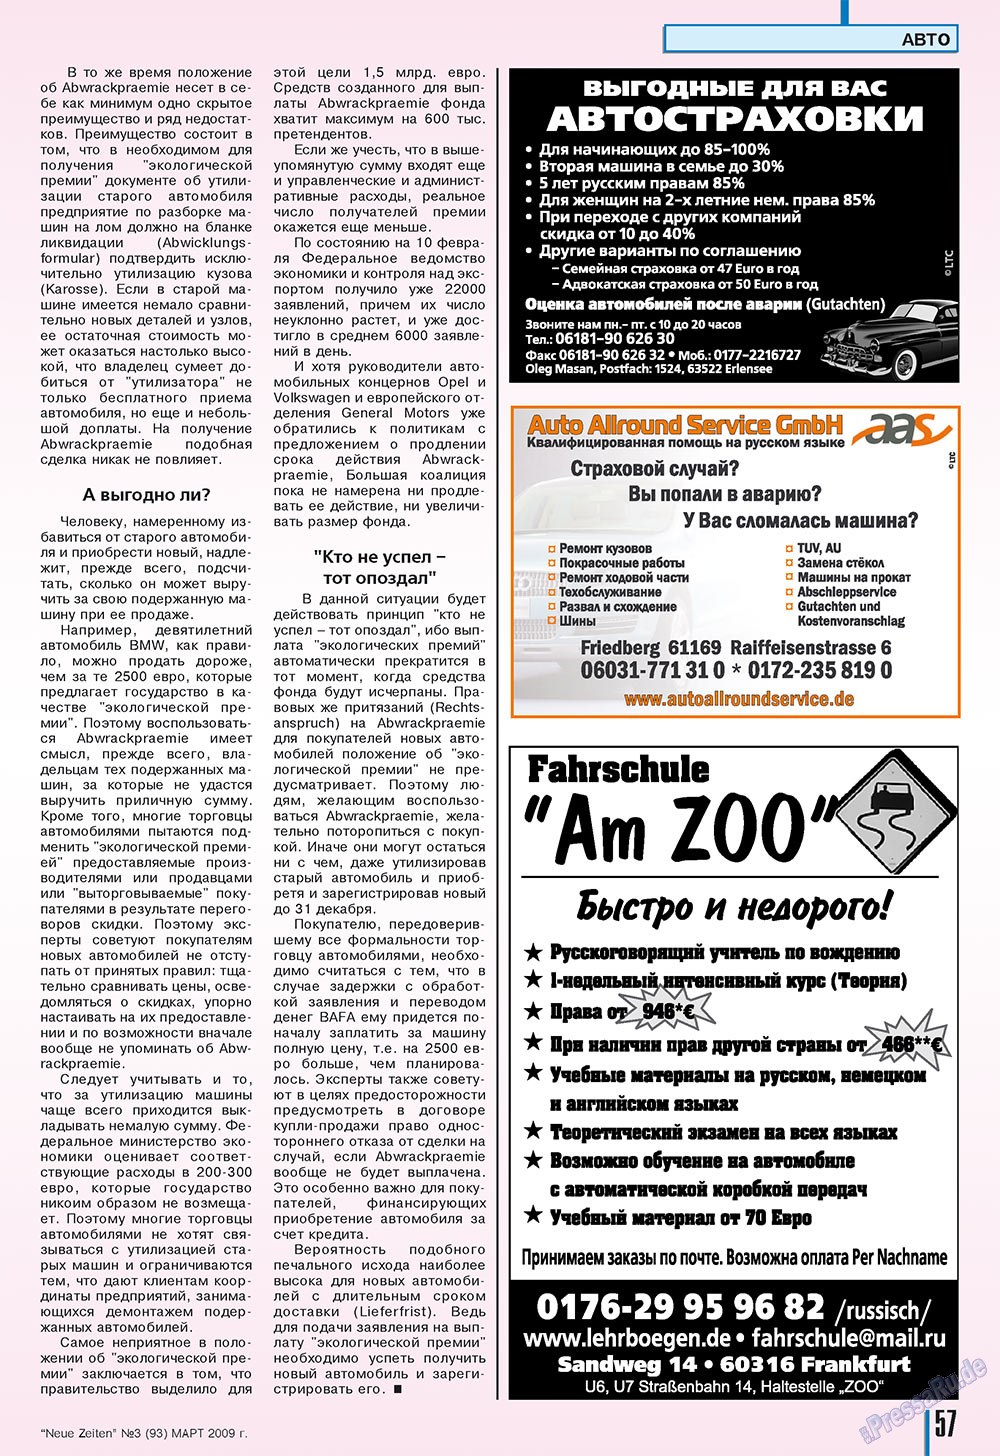 Neue Zeiten (журнал). 2009 год, номер 3, стр. 57